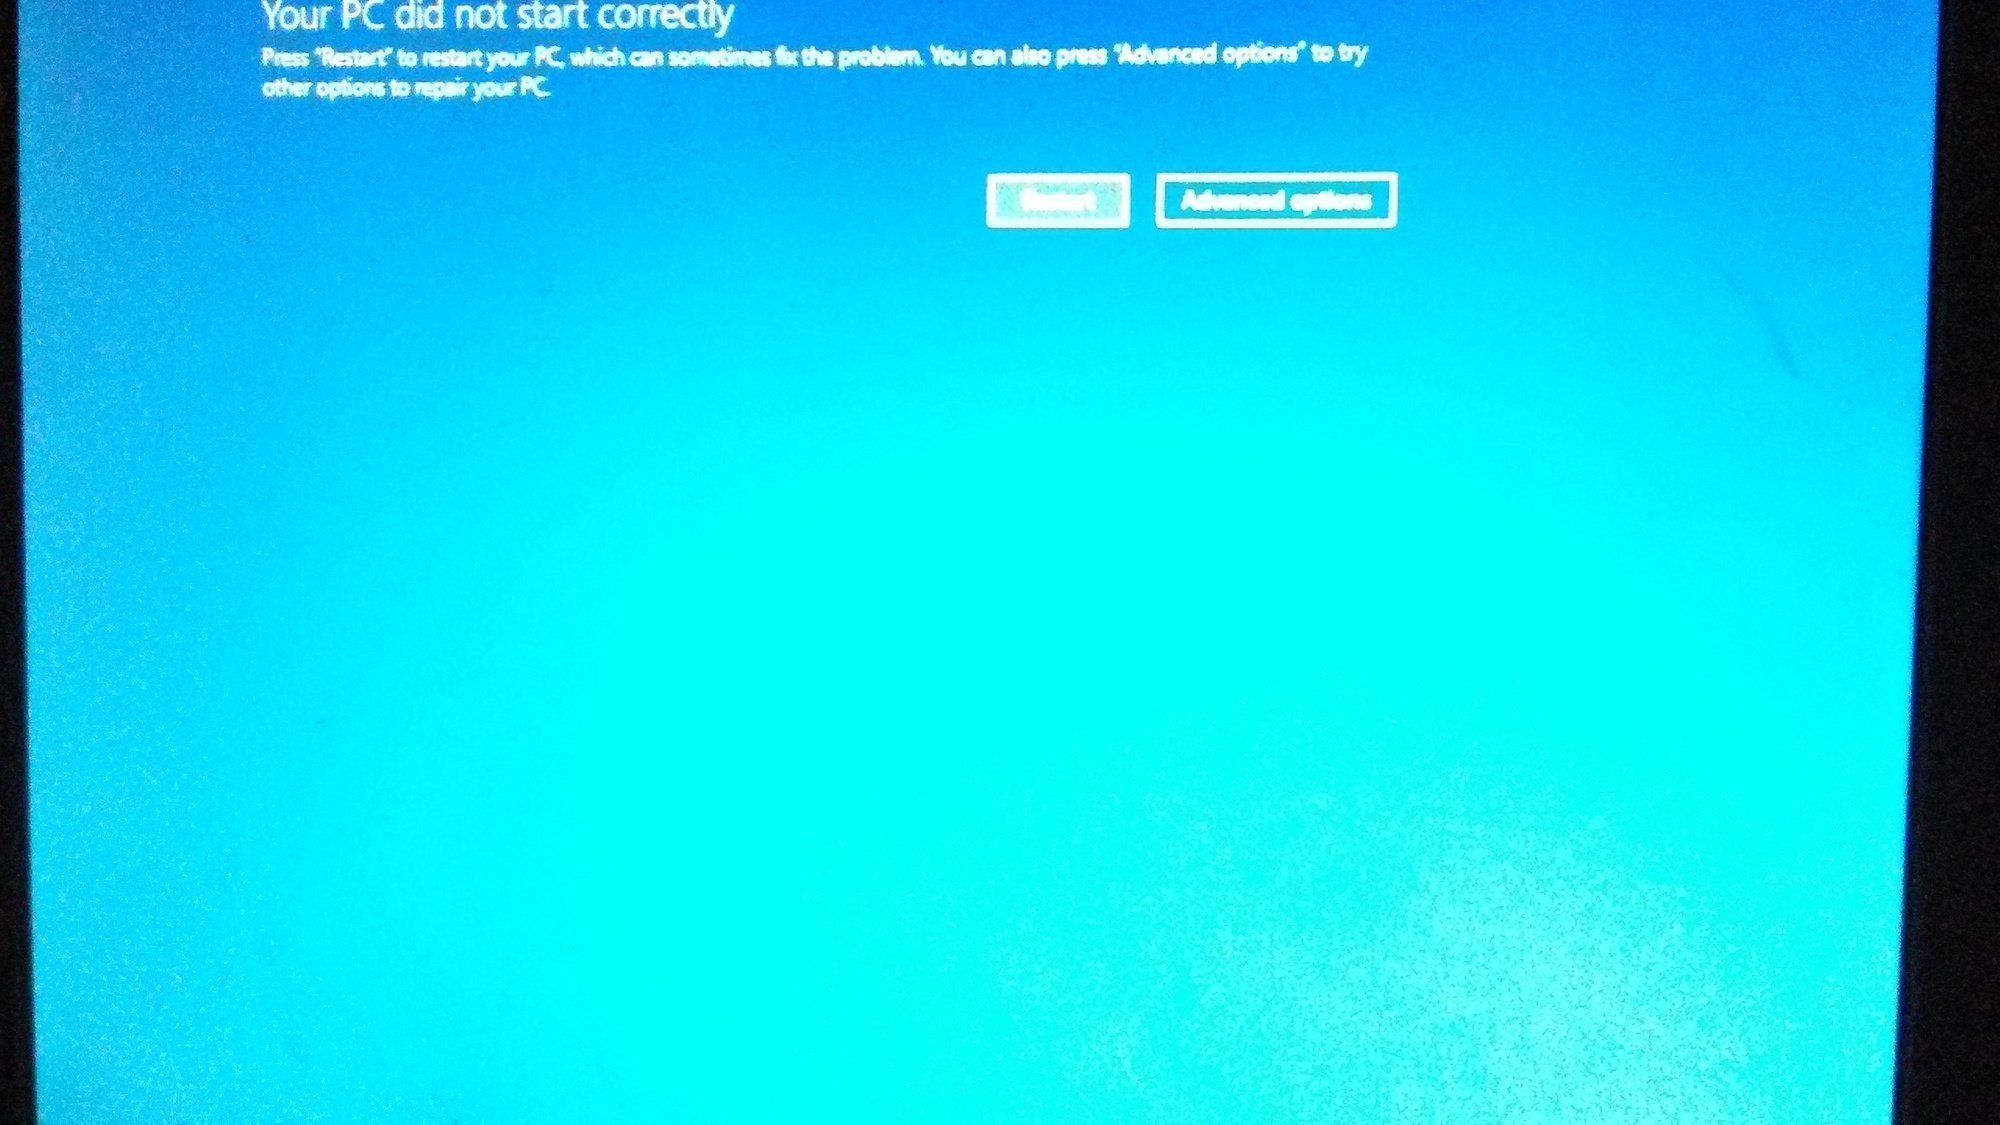 Windows 10 Computer Crashed bfc49bd5-a270-4c6a-8034-20eb930f525a?upload=true.jpg